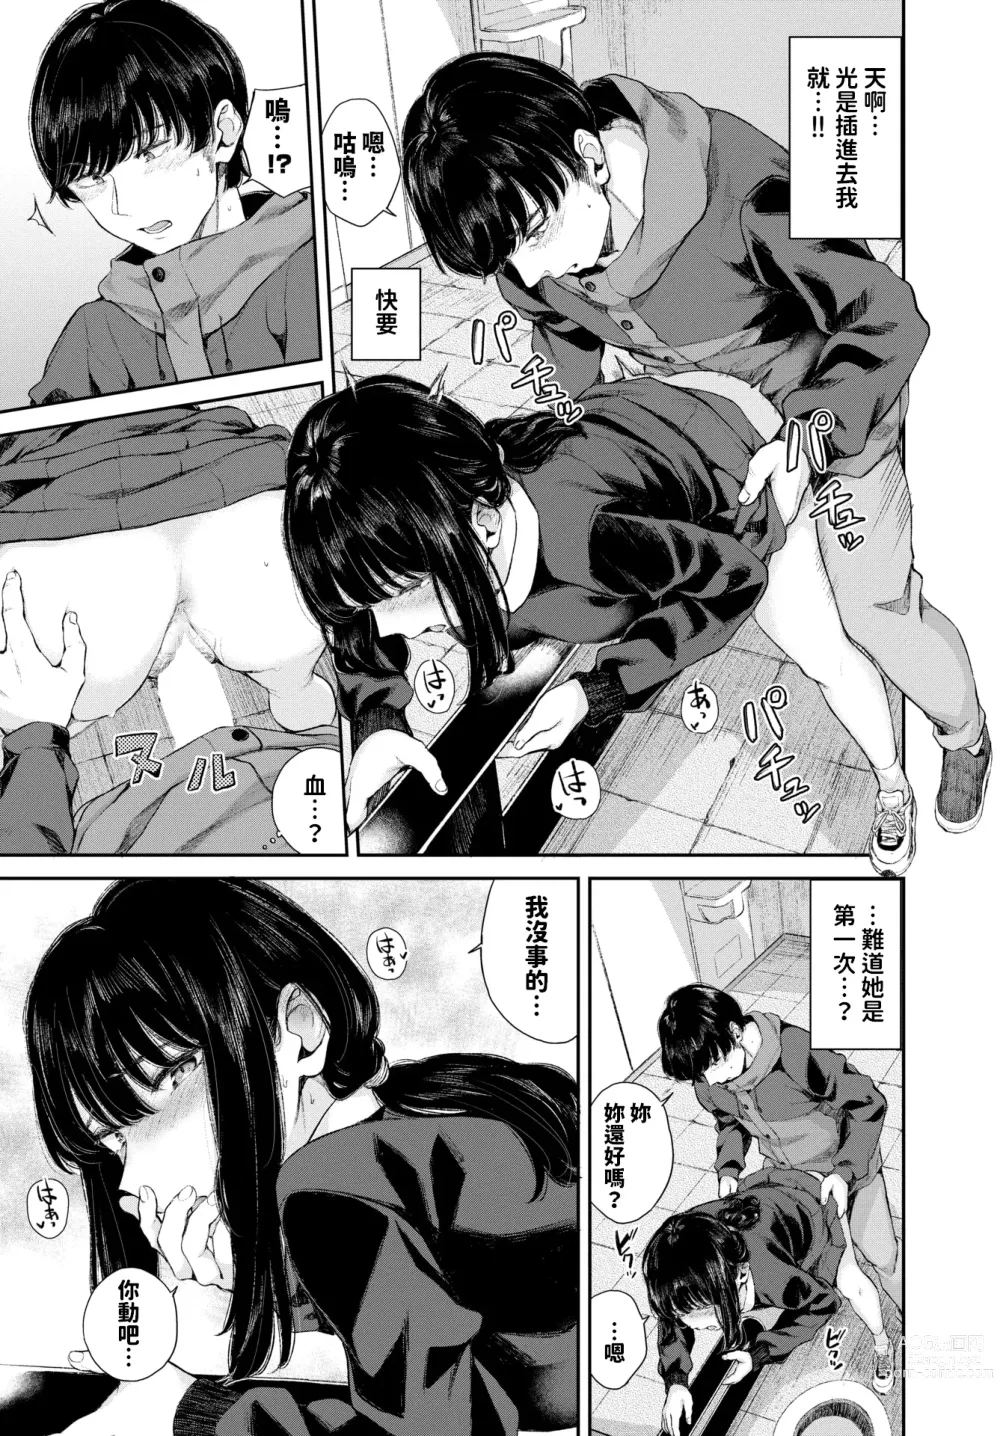 Page 13 of manga Yuki Zuri to Ao - passing by and blue.